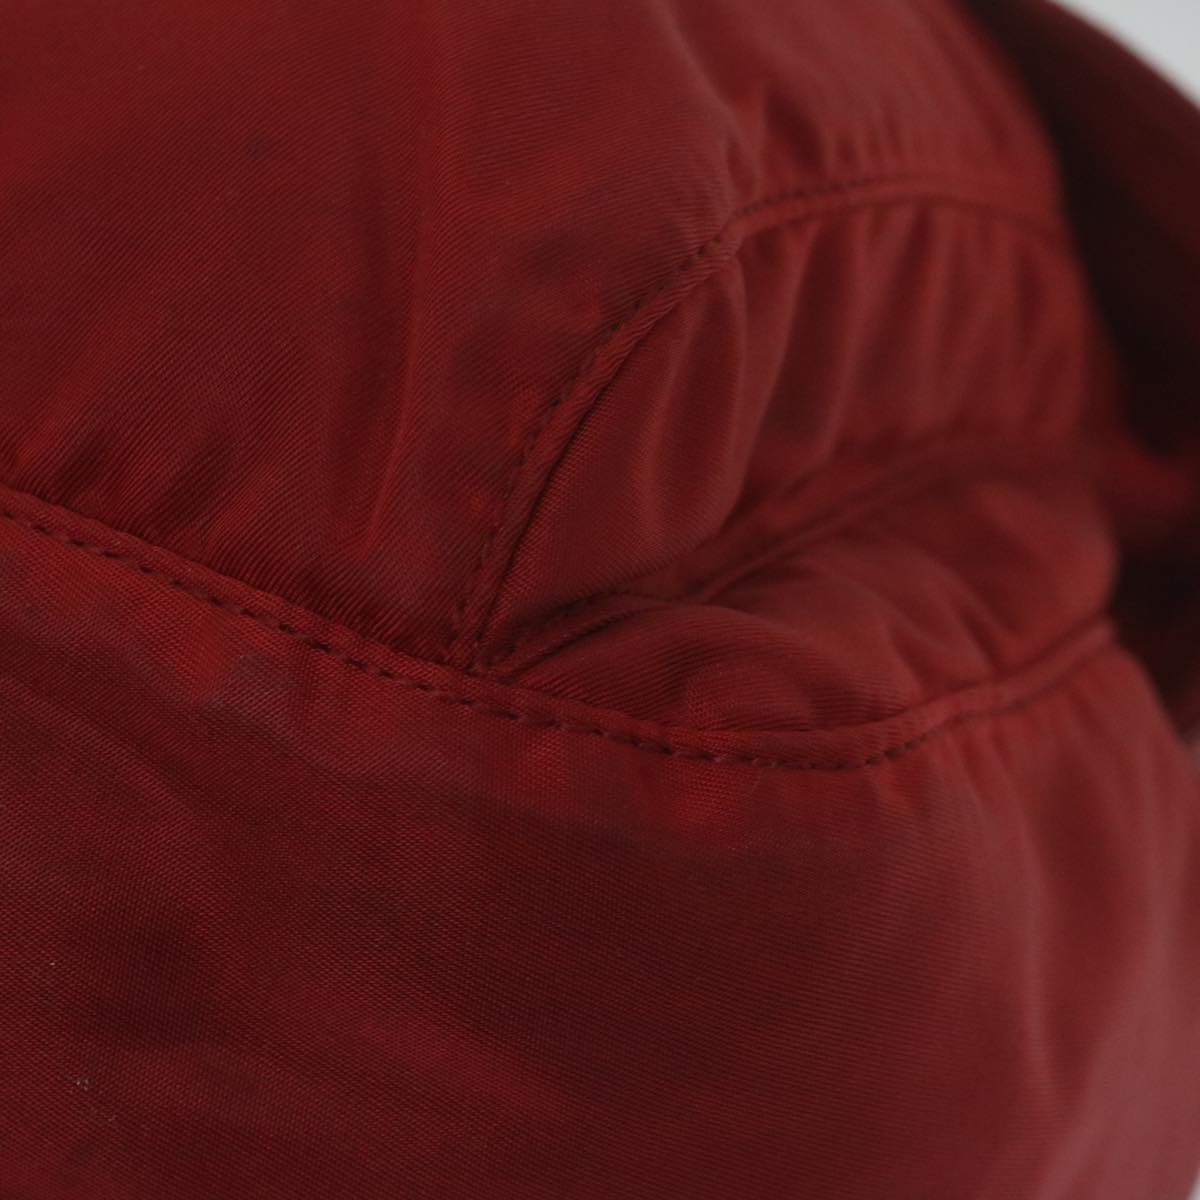 PRADA Shoulder Bag Nylon Red Auth ep3099